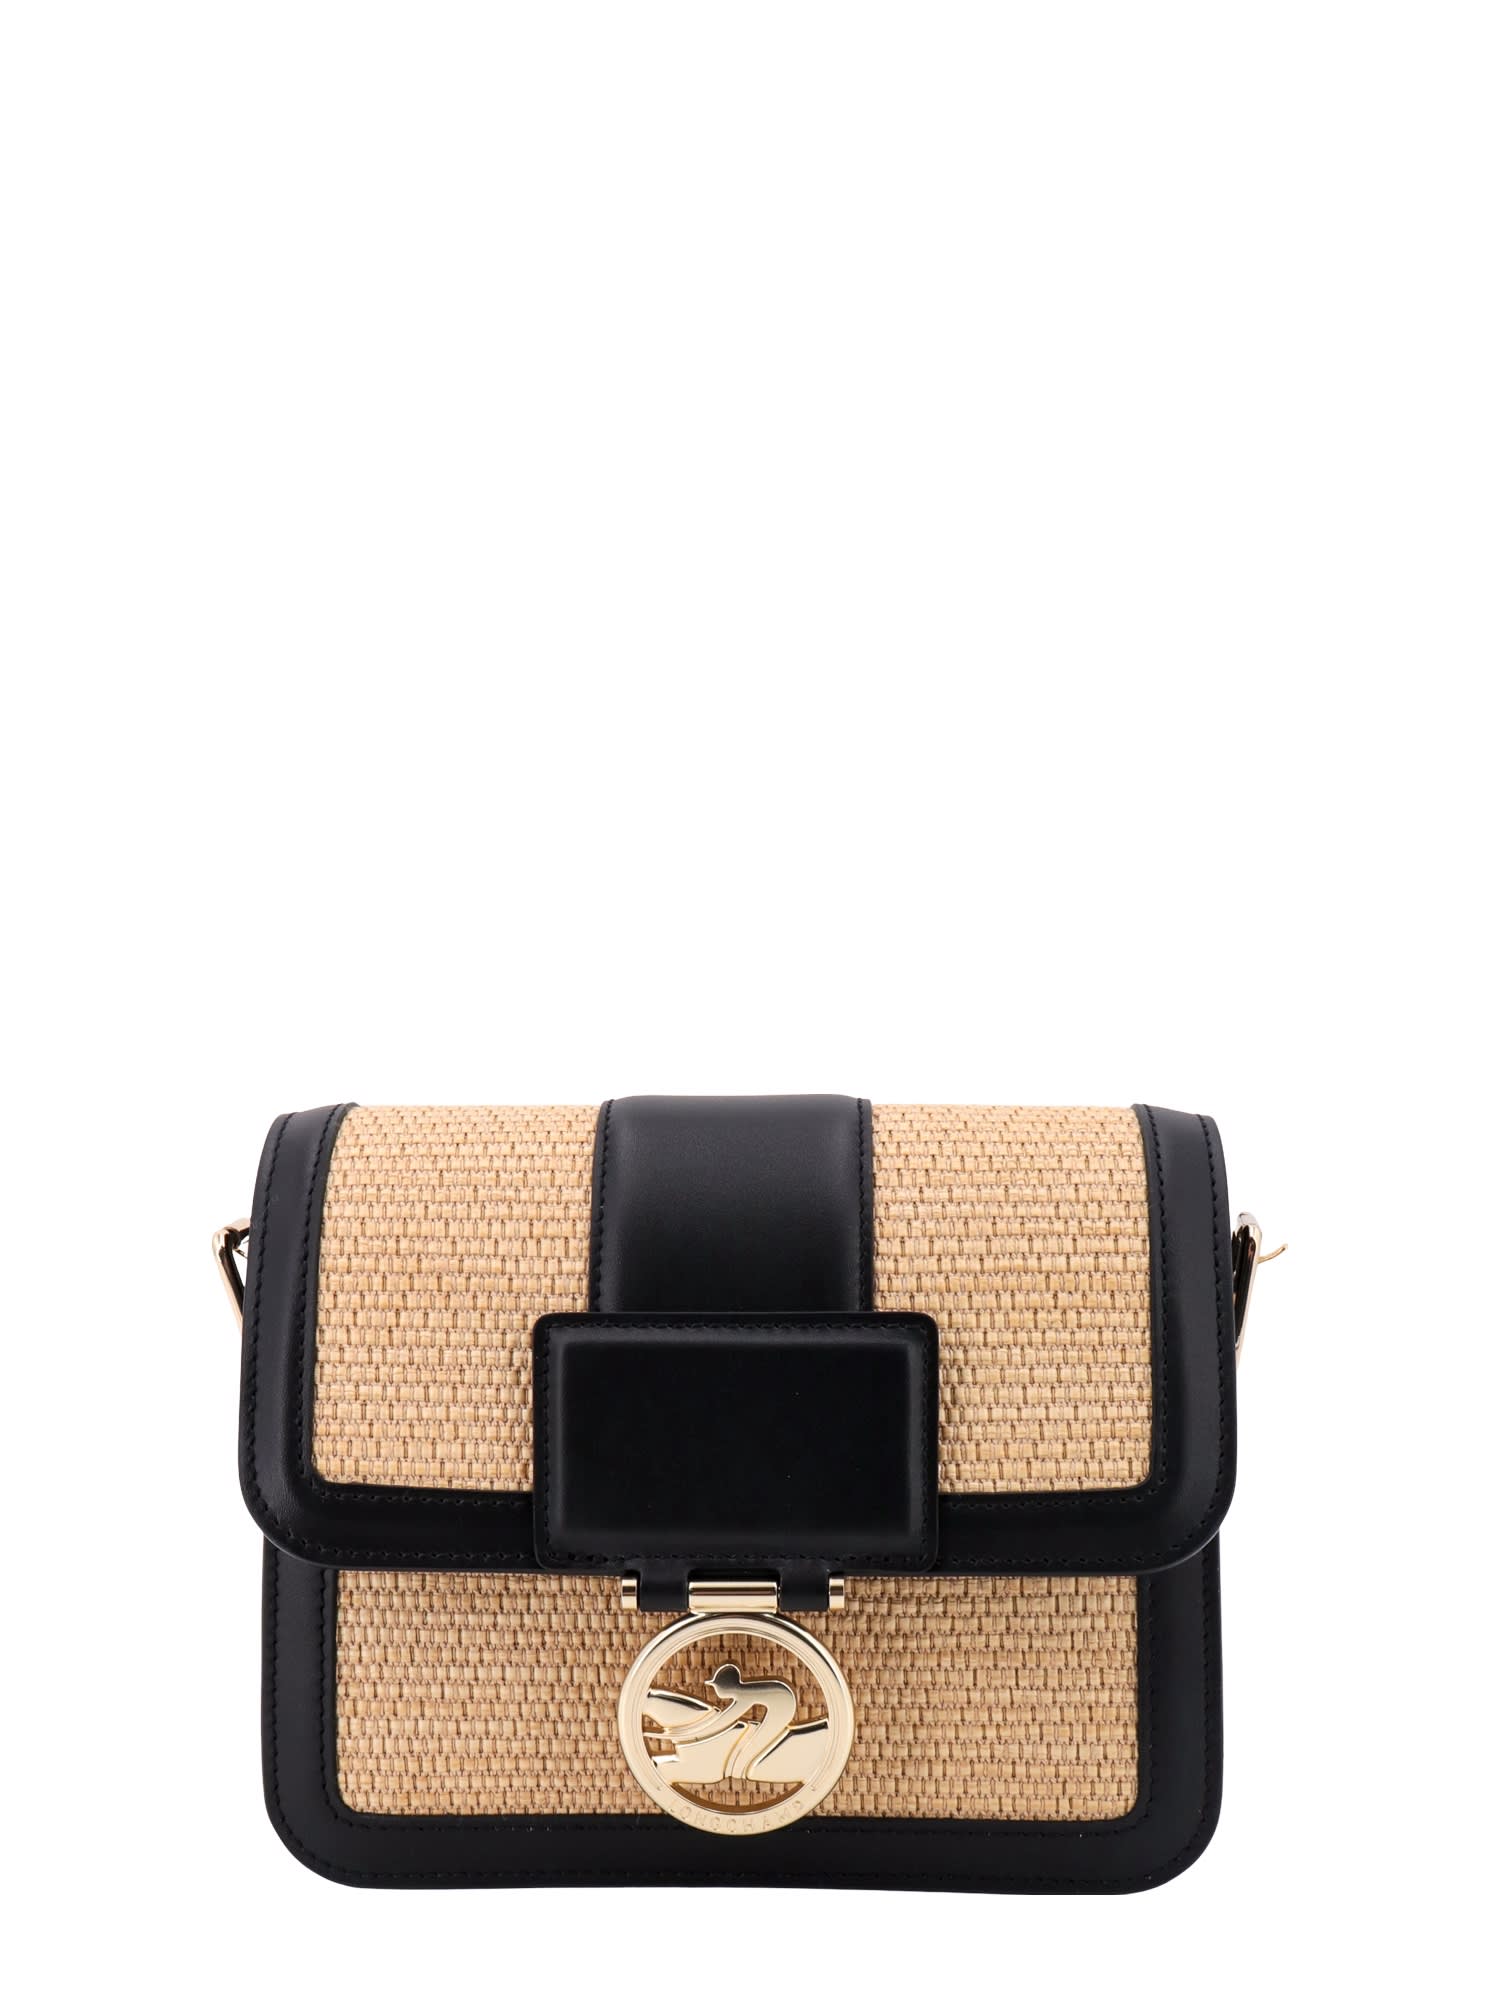 Longchamp Box-trot Shoulder Bag